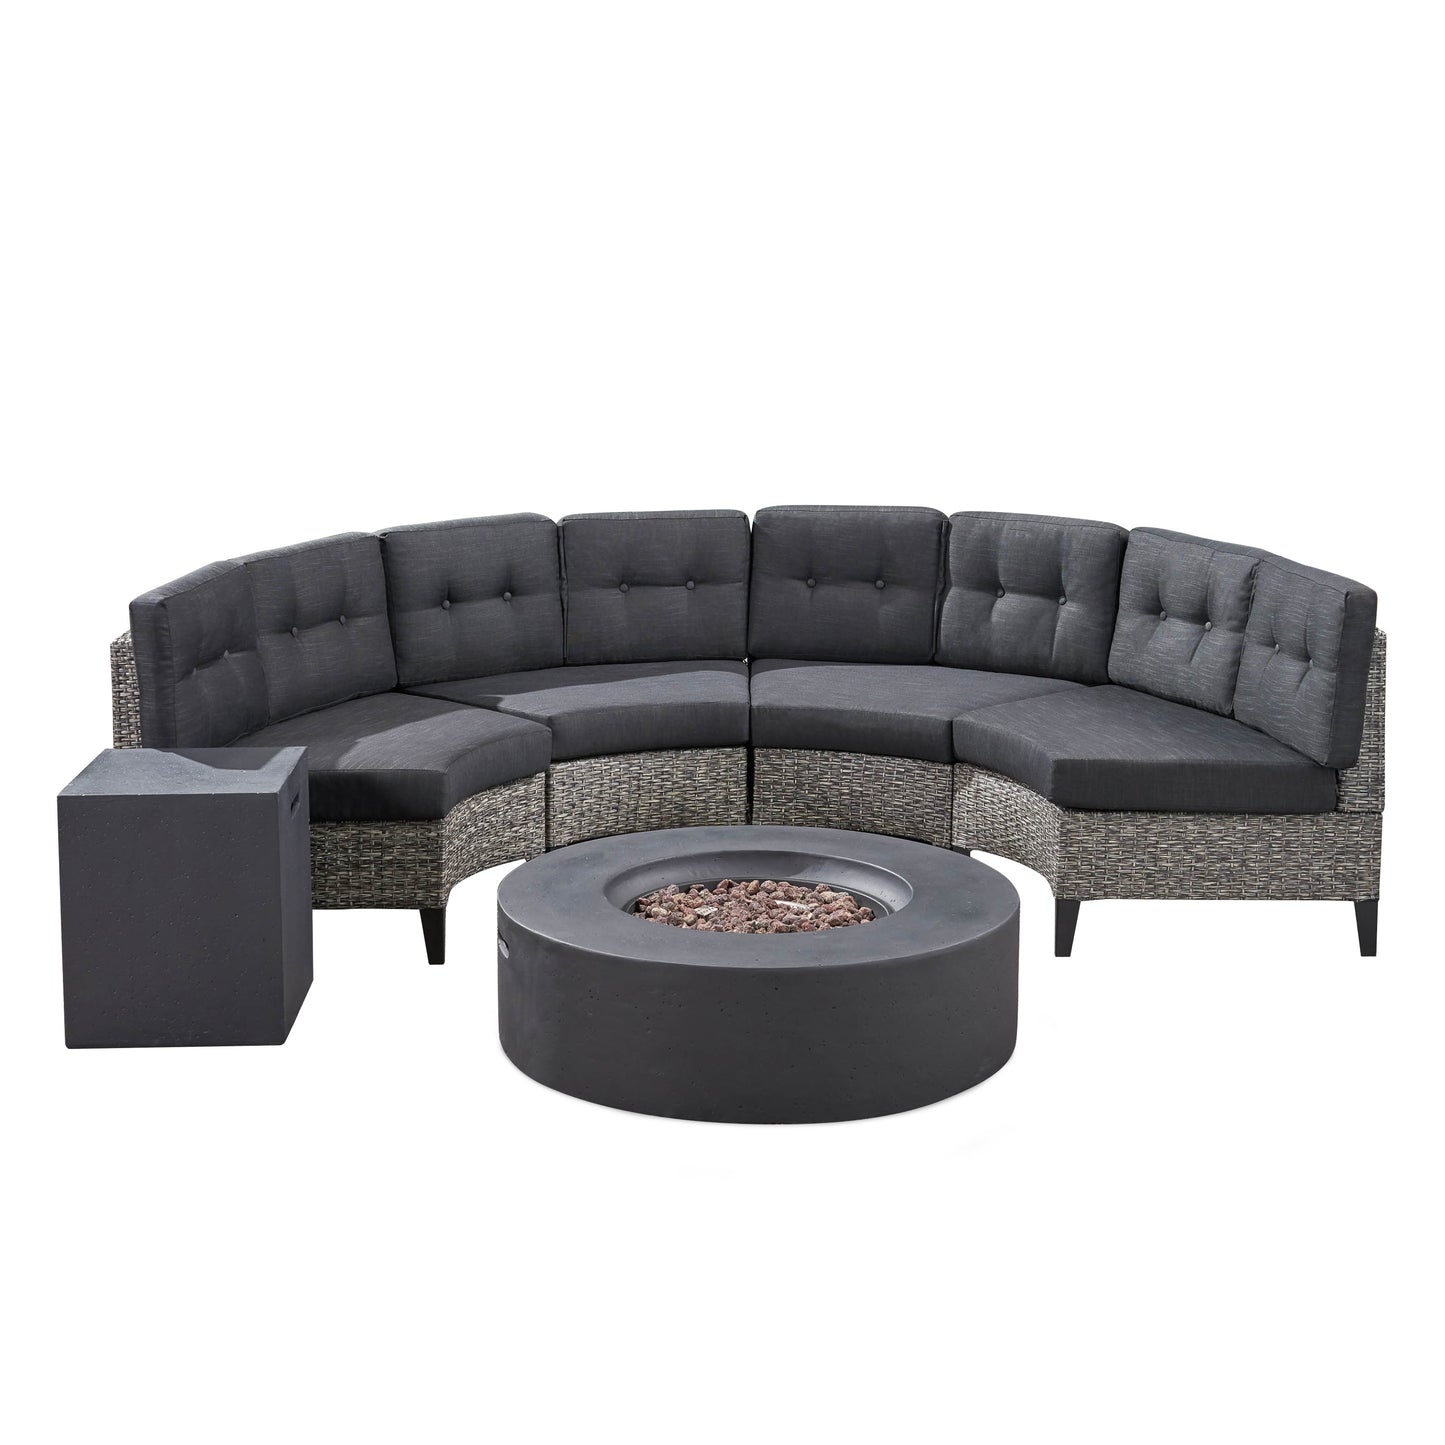 Nessett Outdoor 6 Piece Mixed Black Wicker Half Round Sofa Set with Dark Grey Fire Table